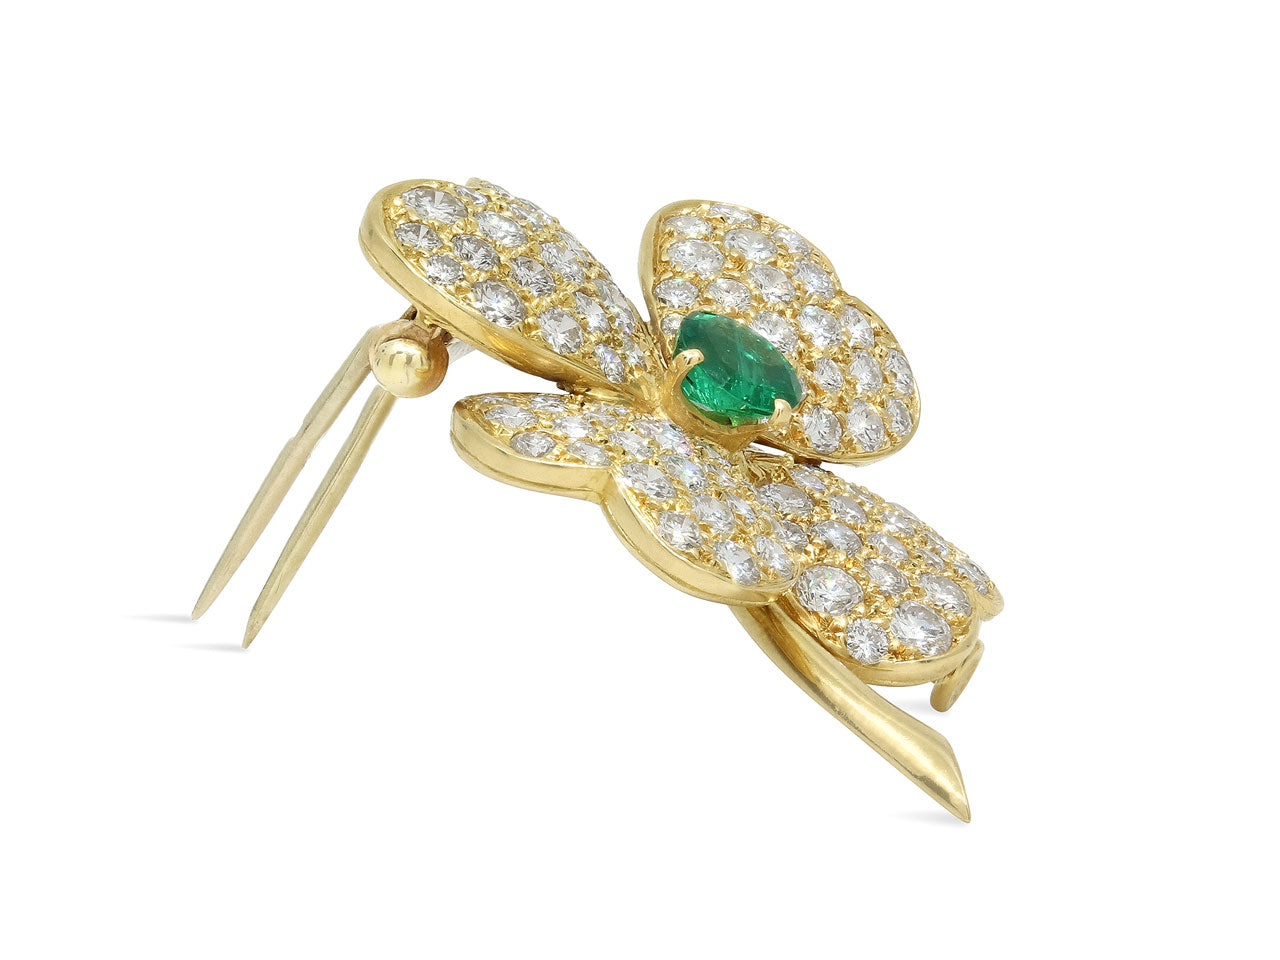 Van Cleef & Arpels 'Cosmos' Diamond and Emerald Brooch in 18K Gold